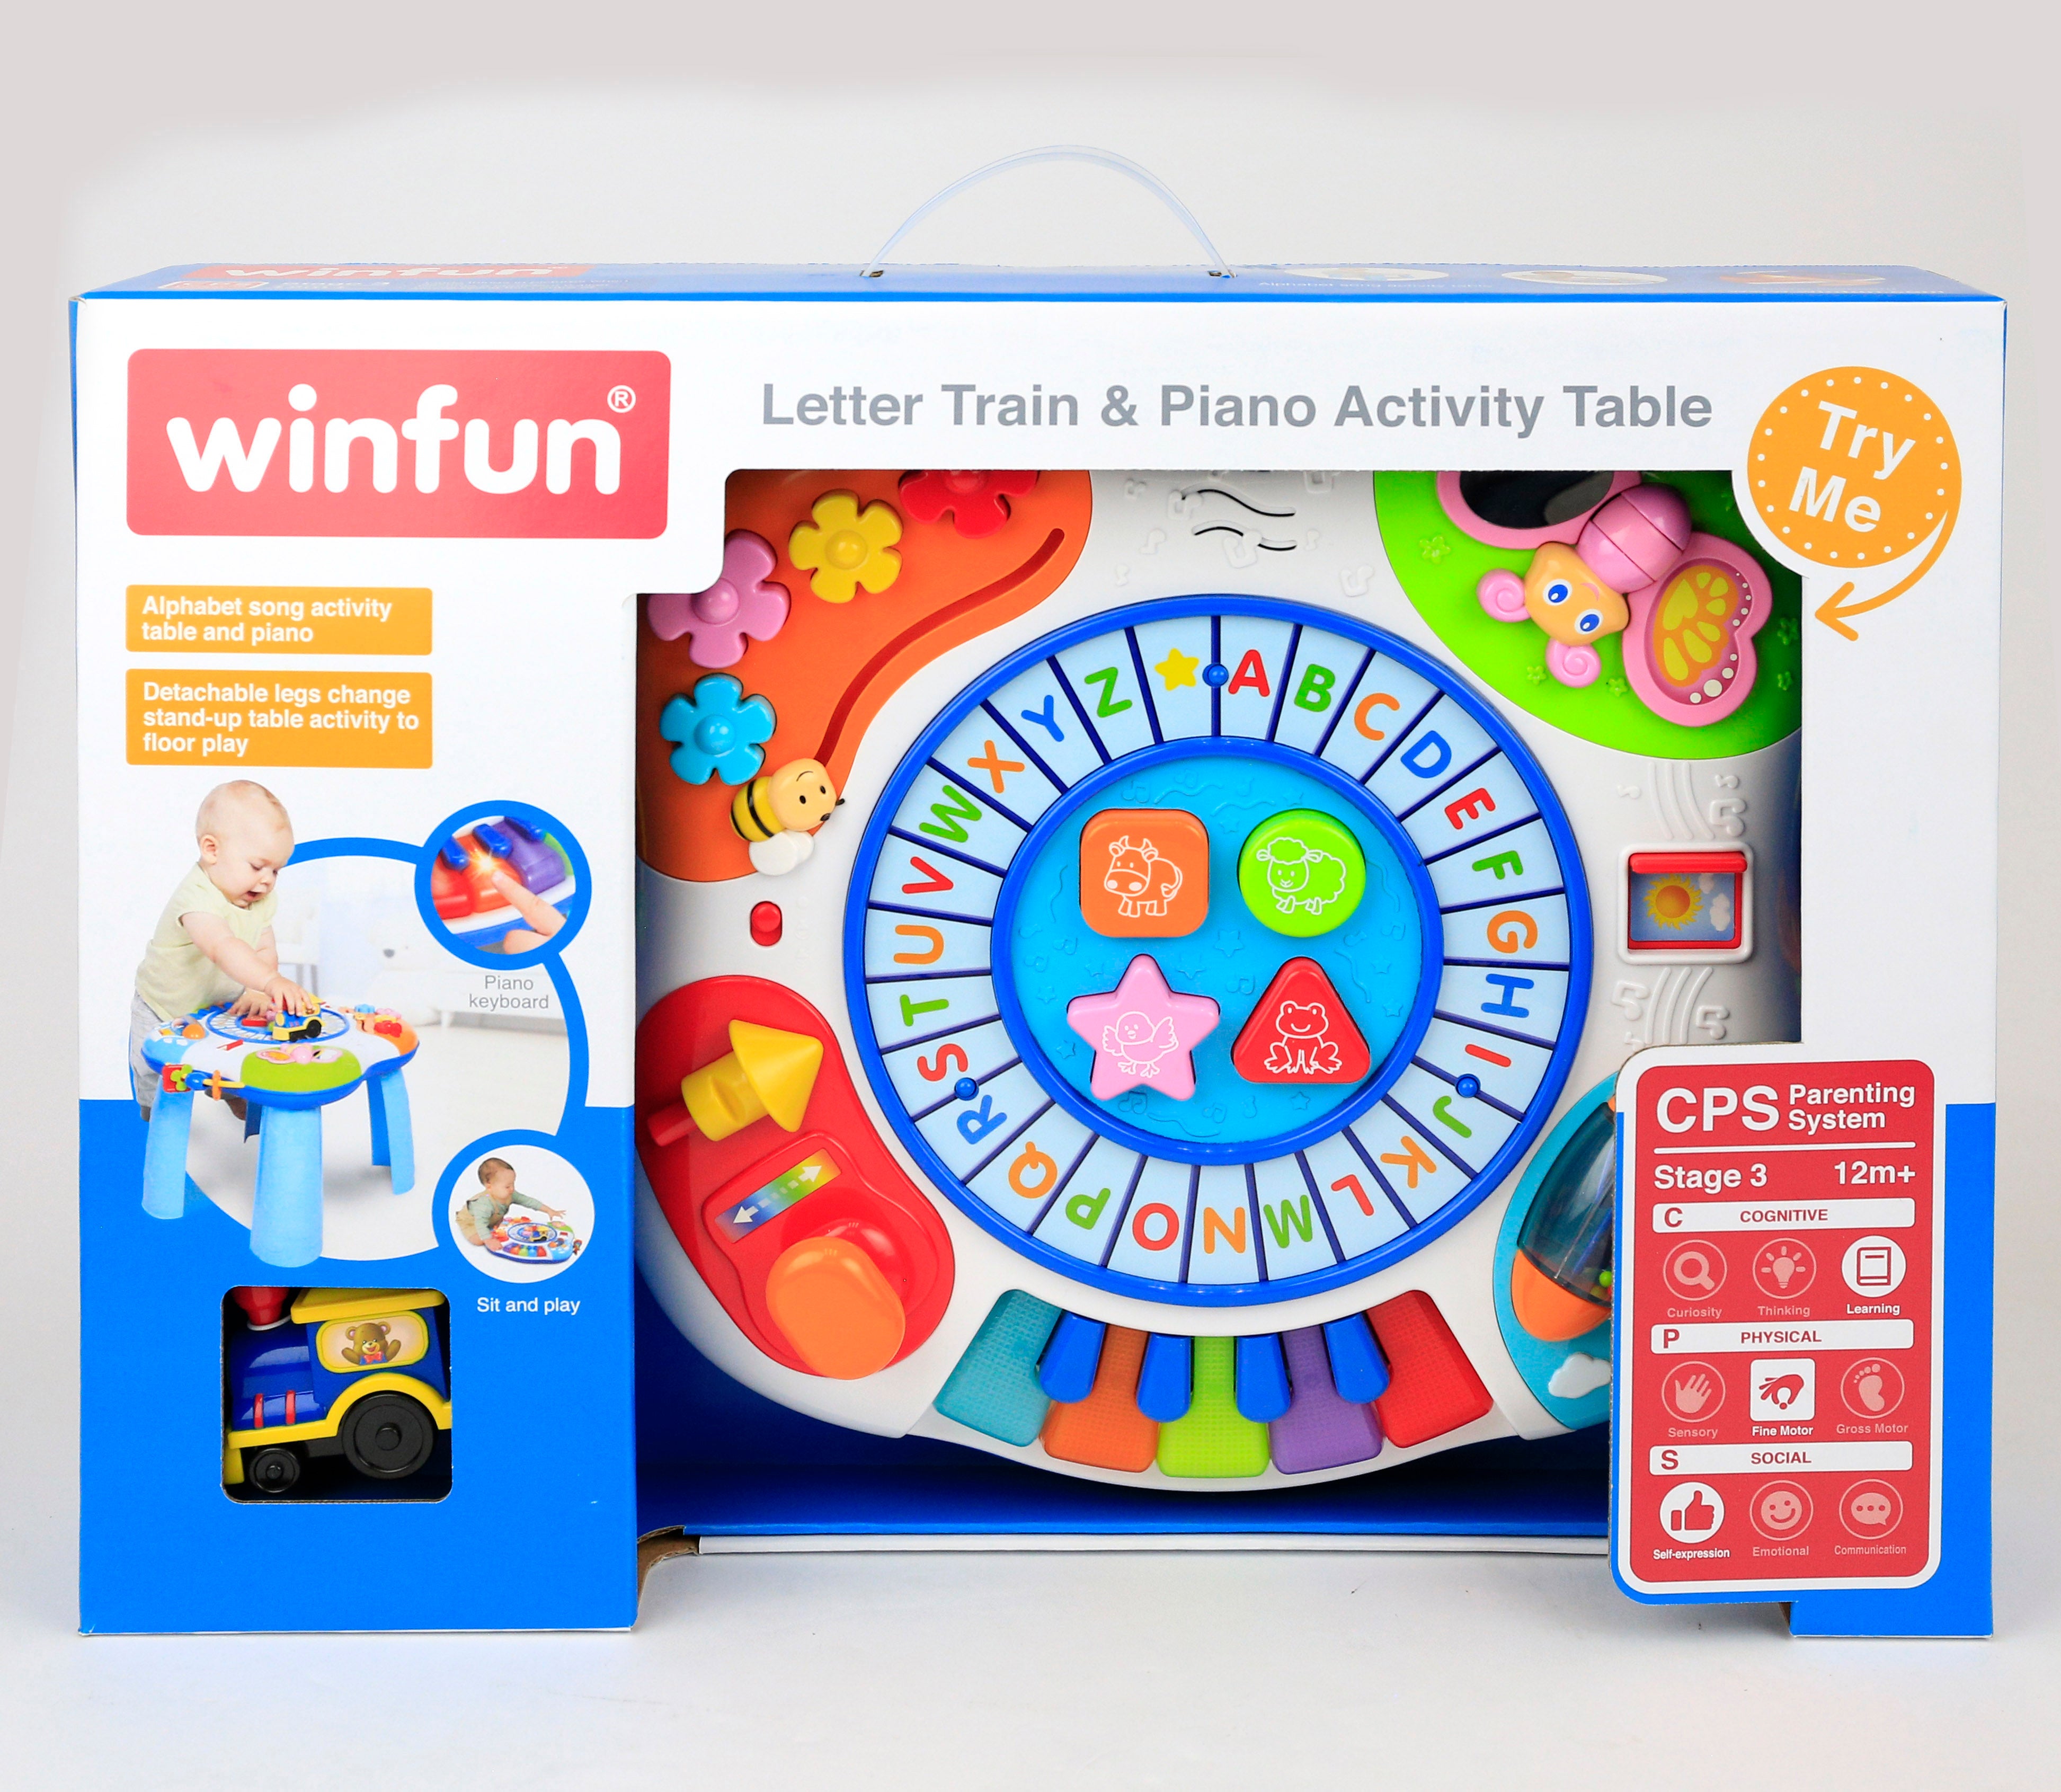 Winfun - Letter Train & Piano Activity Table